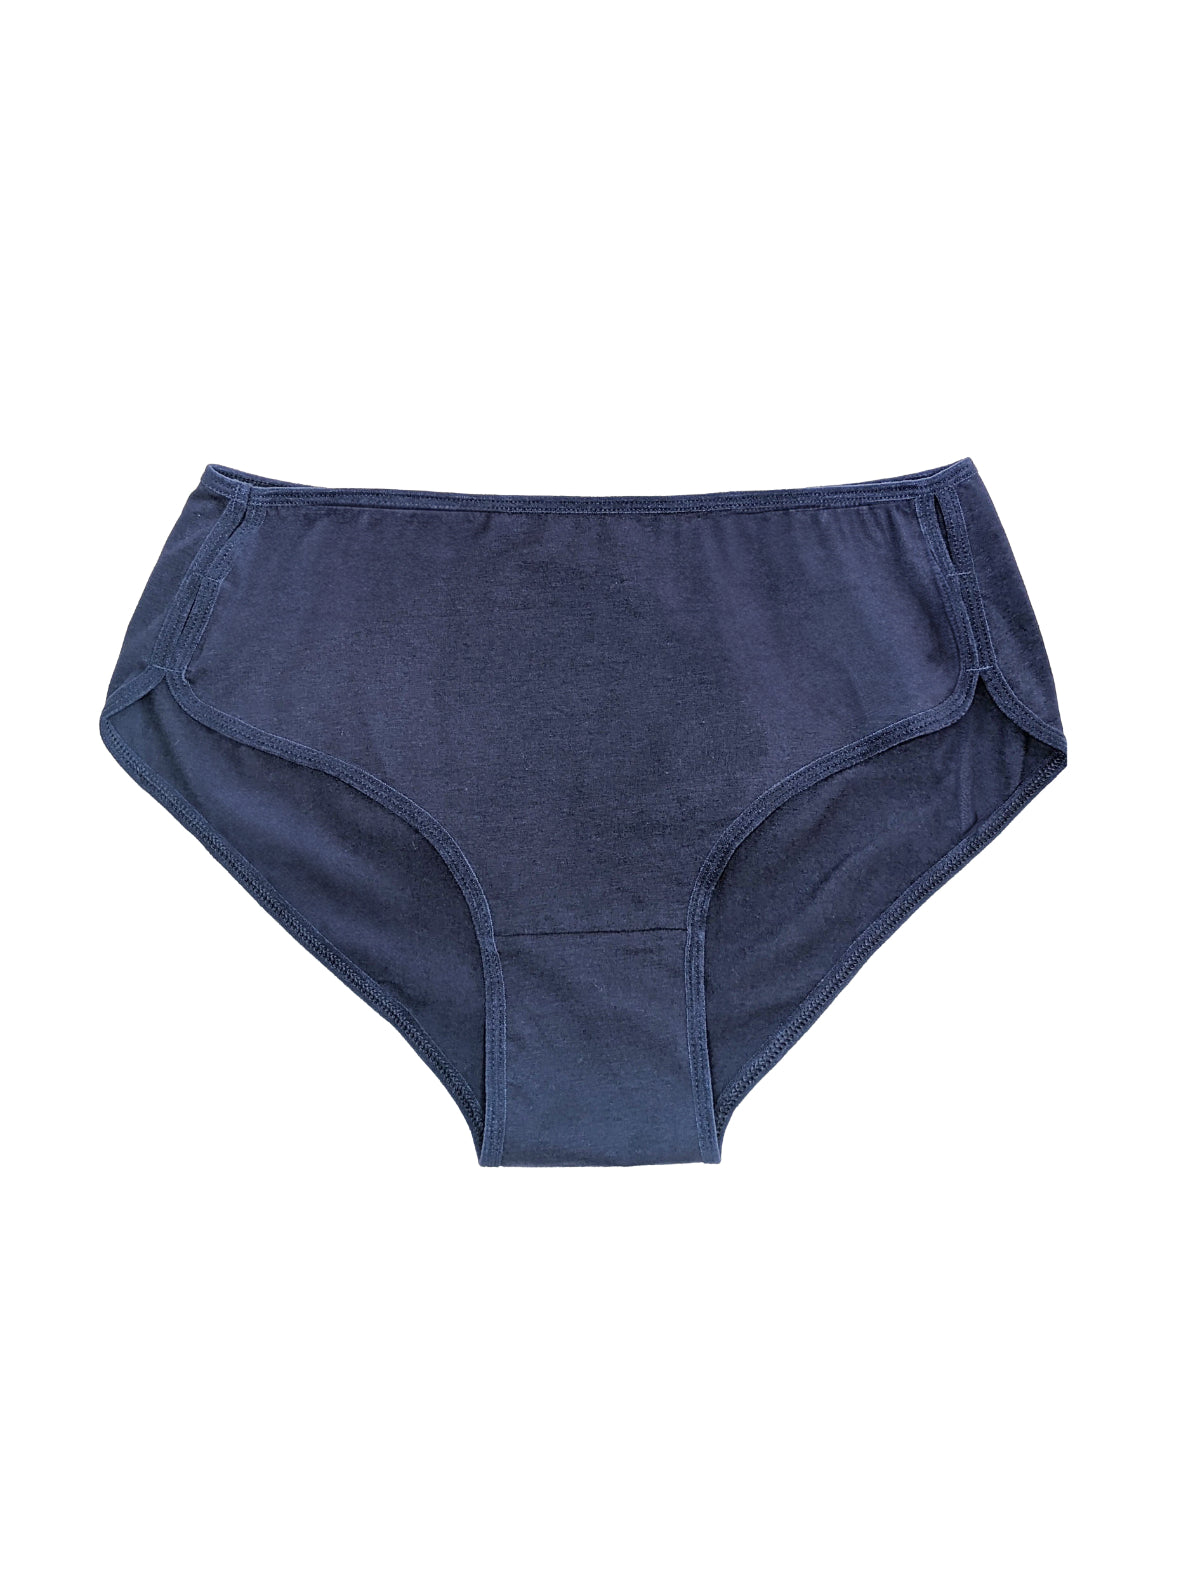 Women's Cotton Modal High-Leg Brief Underwear in Nightfall Navy Blue size  Large